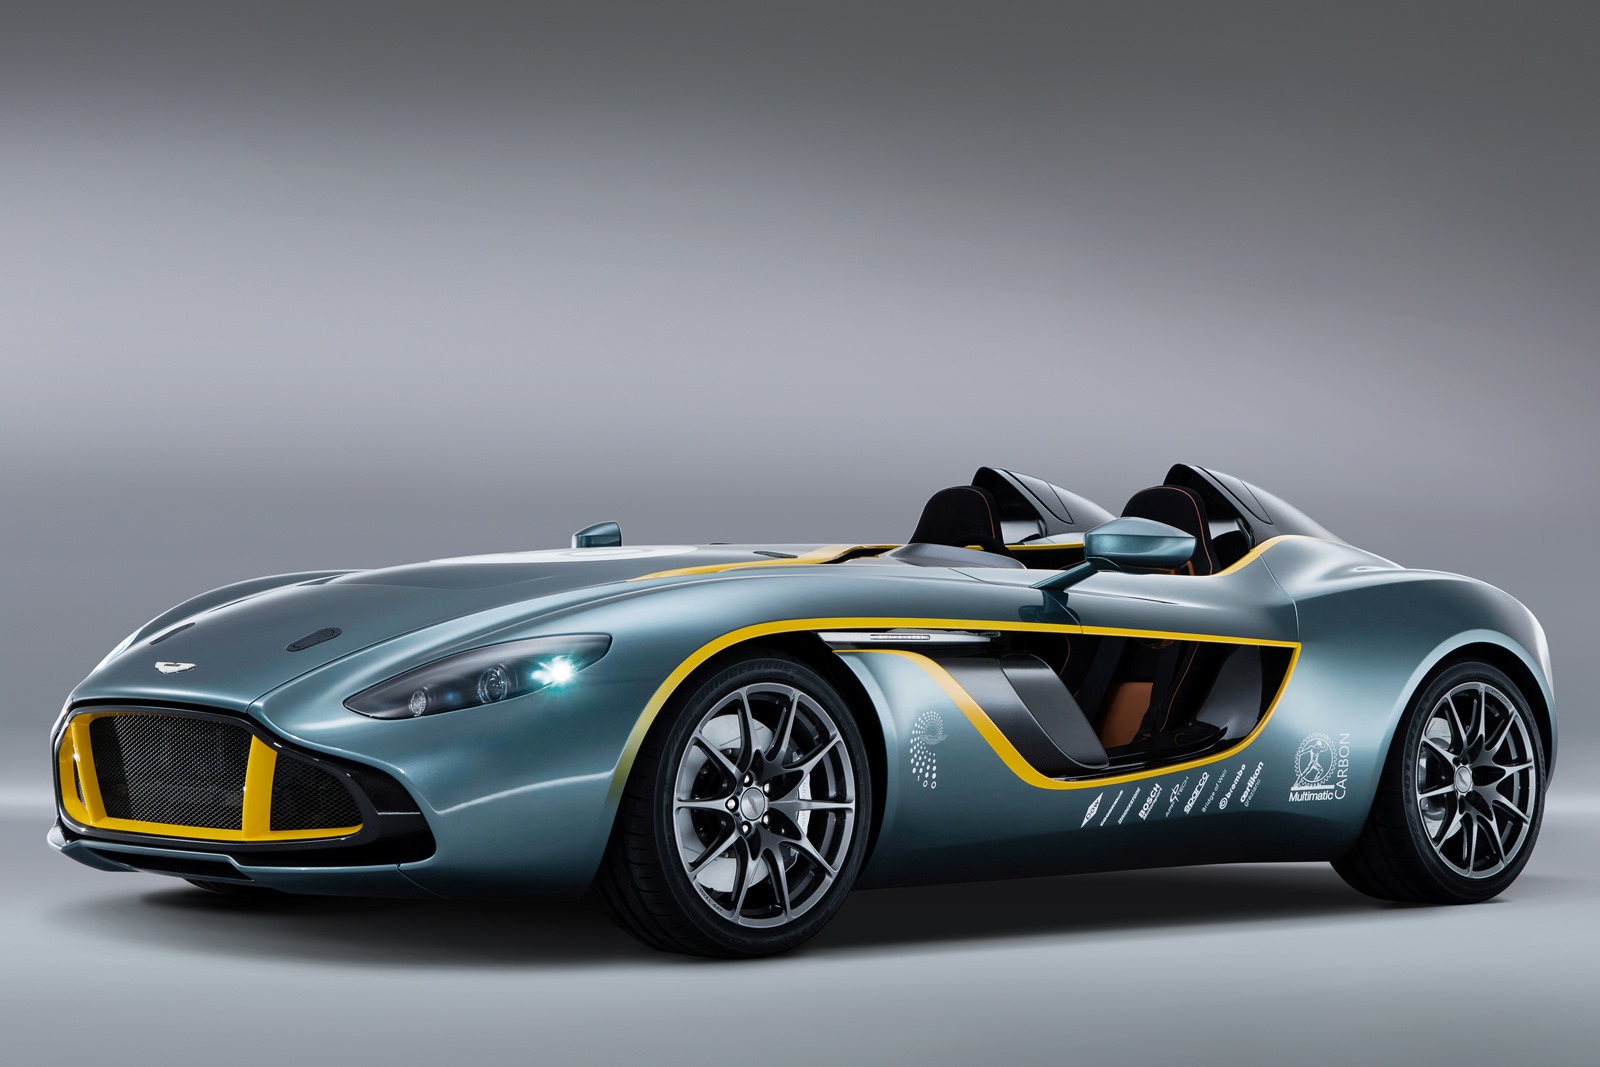 Aston Martin Cars - News: CC100 Speedster concept